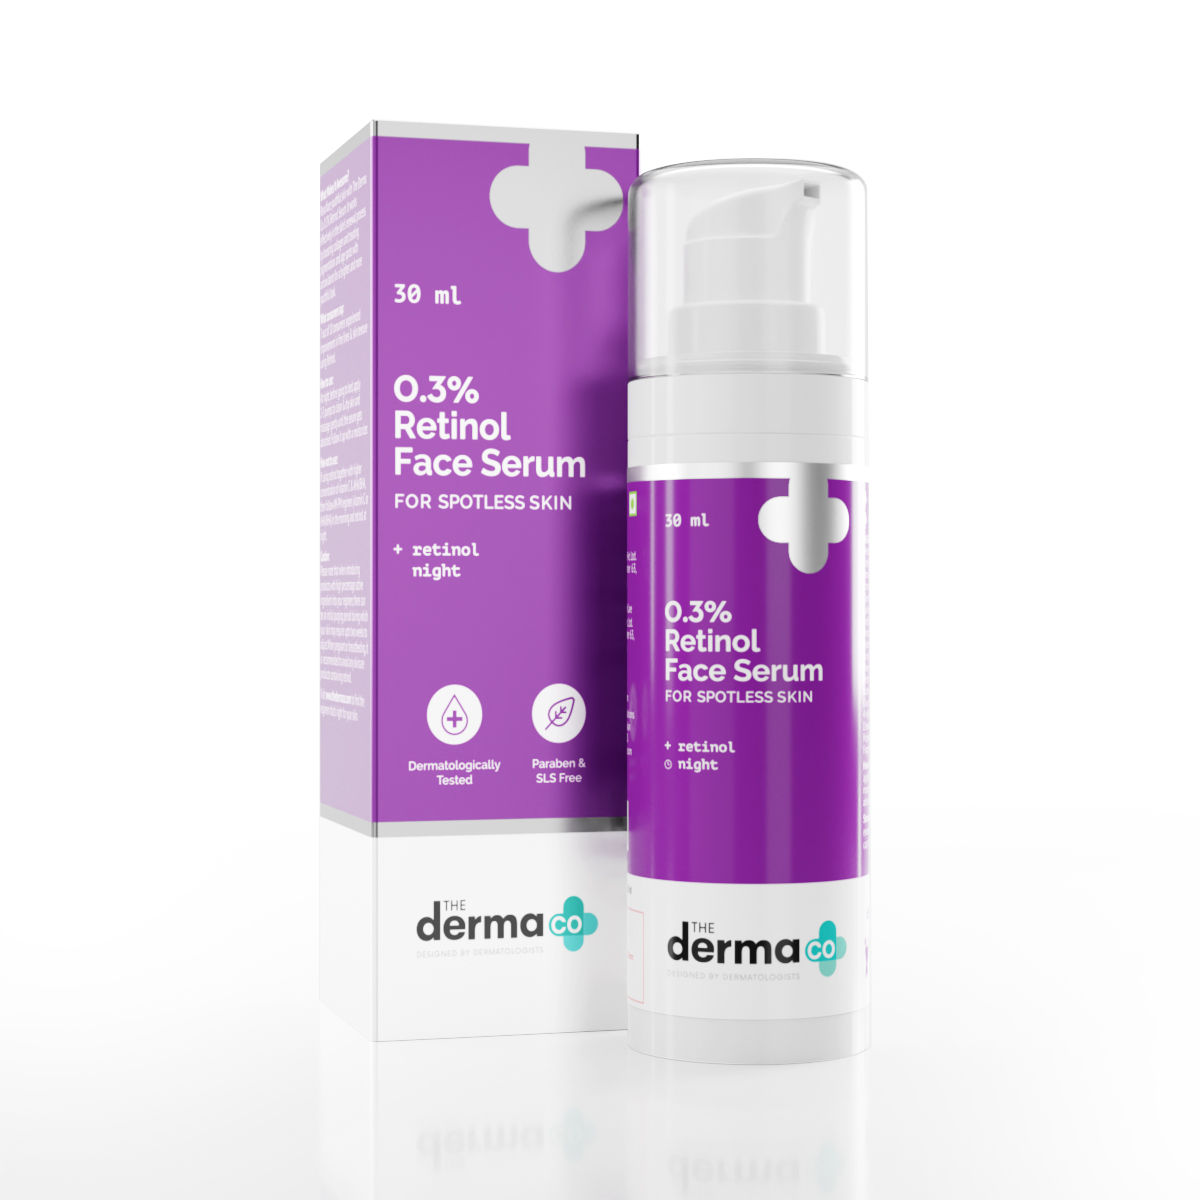 Buy Derma co.0.3% Retinol Serum for & Spotless Skin Online |